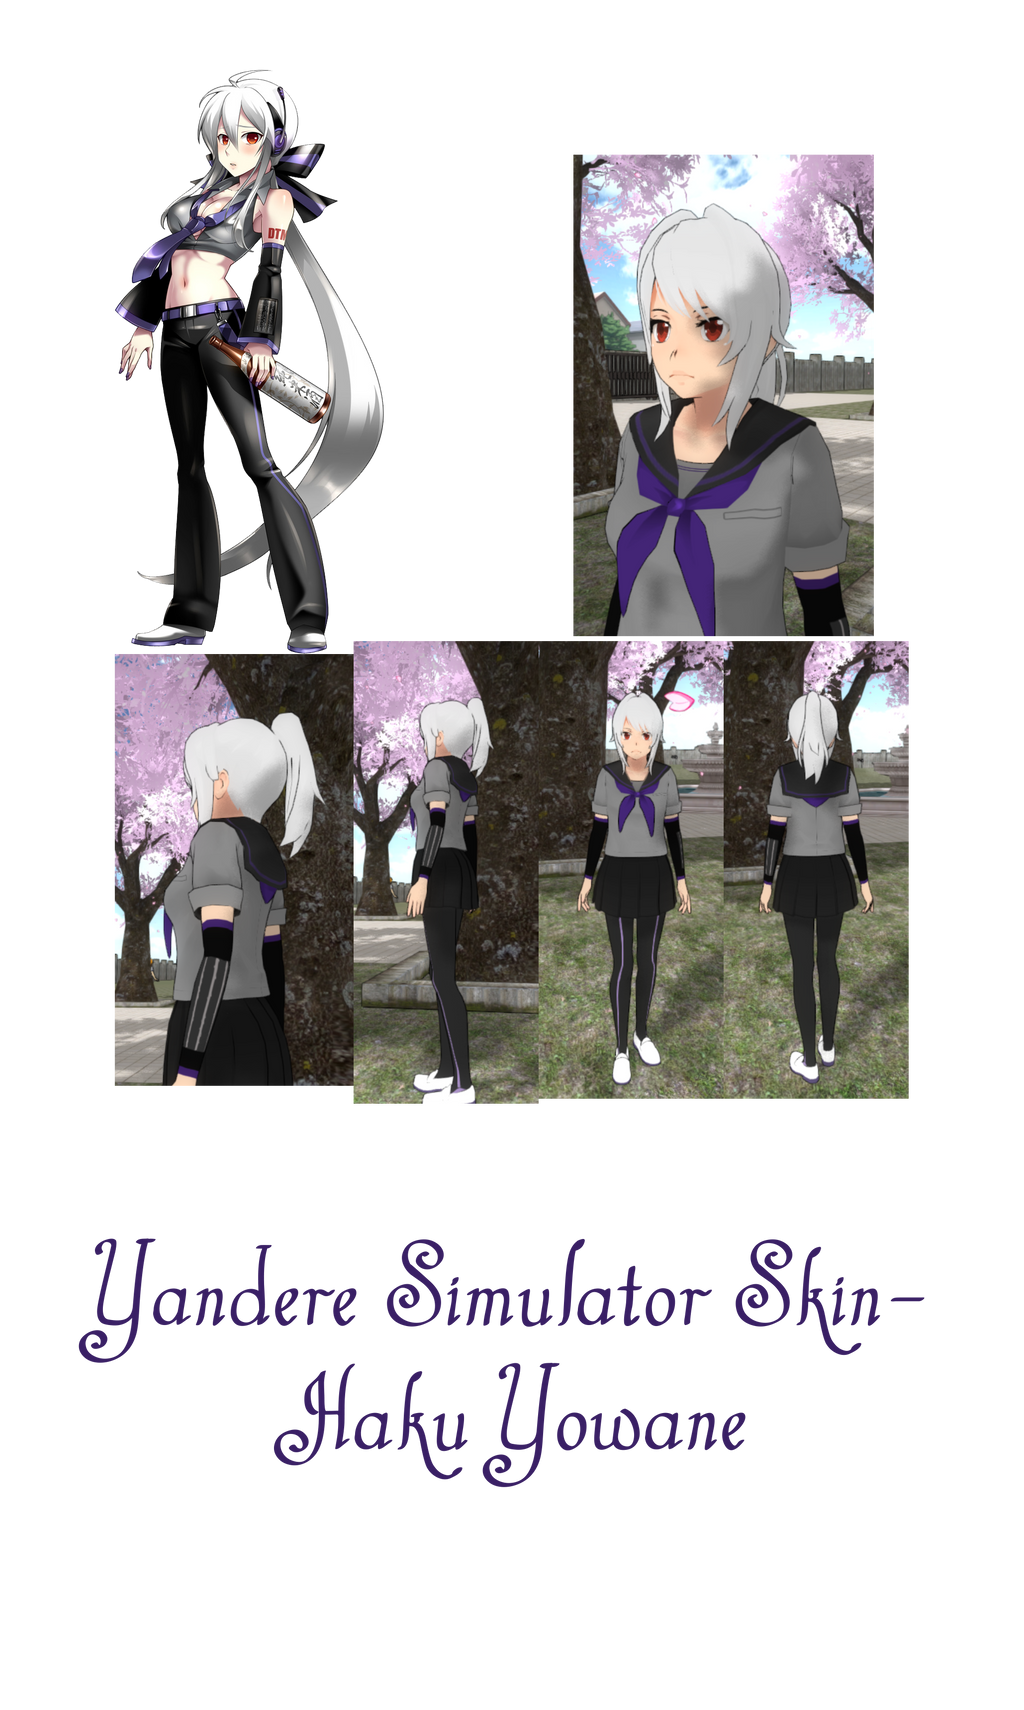 Yandere Simulator Haku Yowane Skin By Imaginaryalchemist On Deviantart